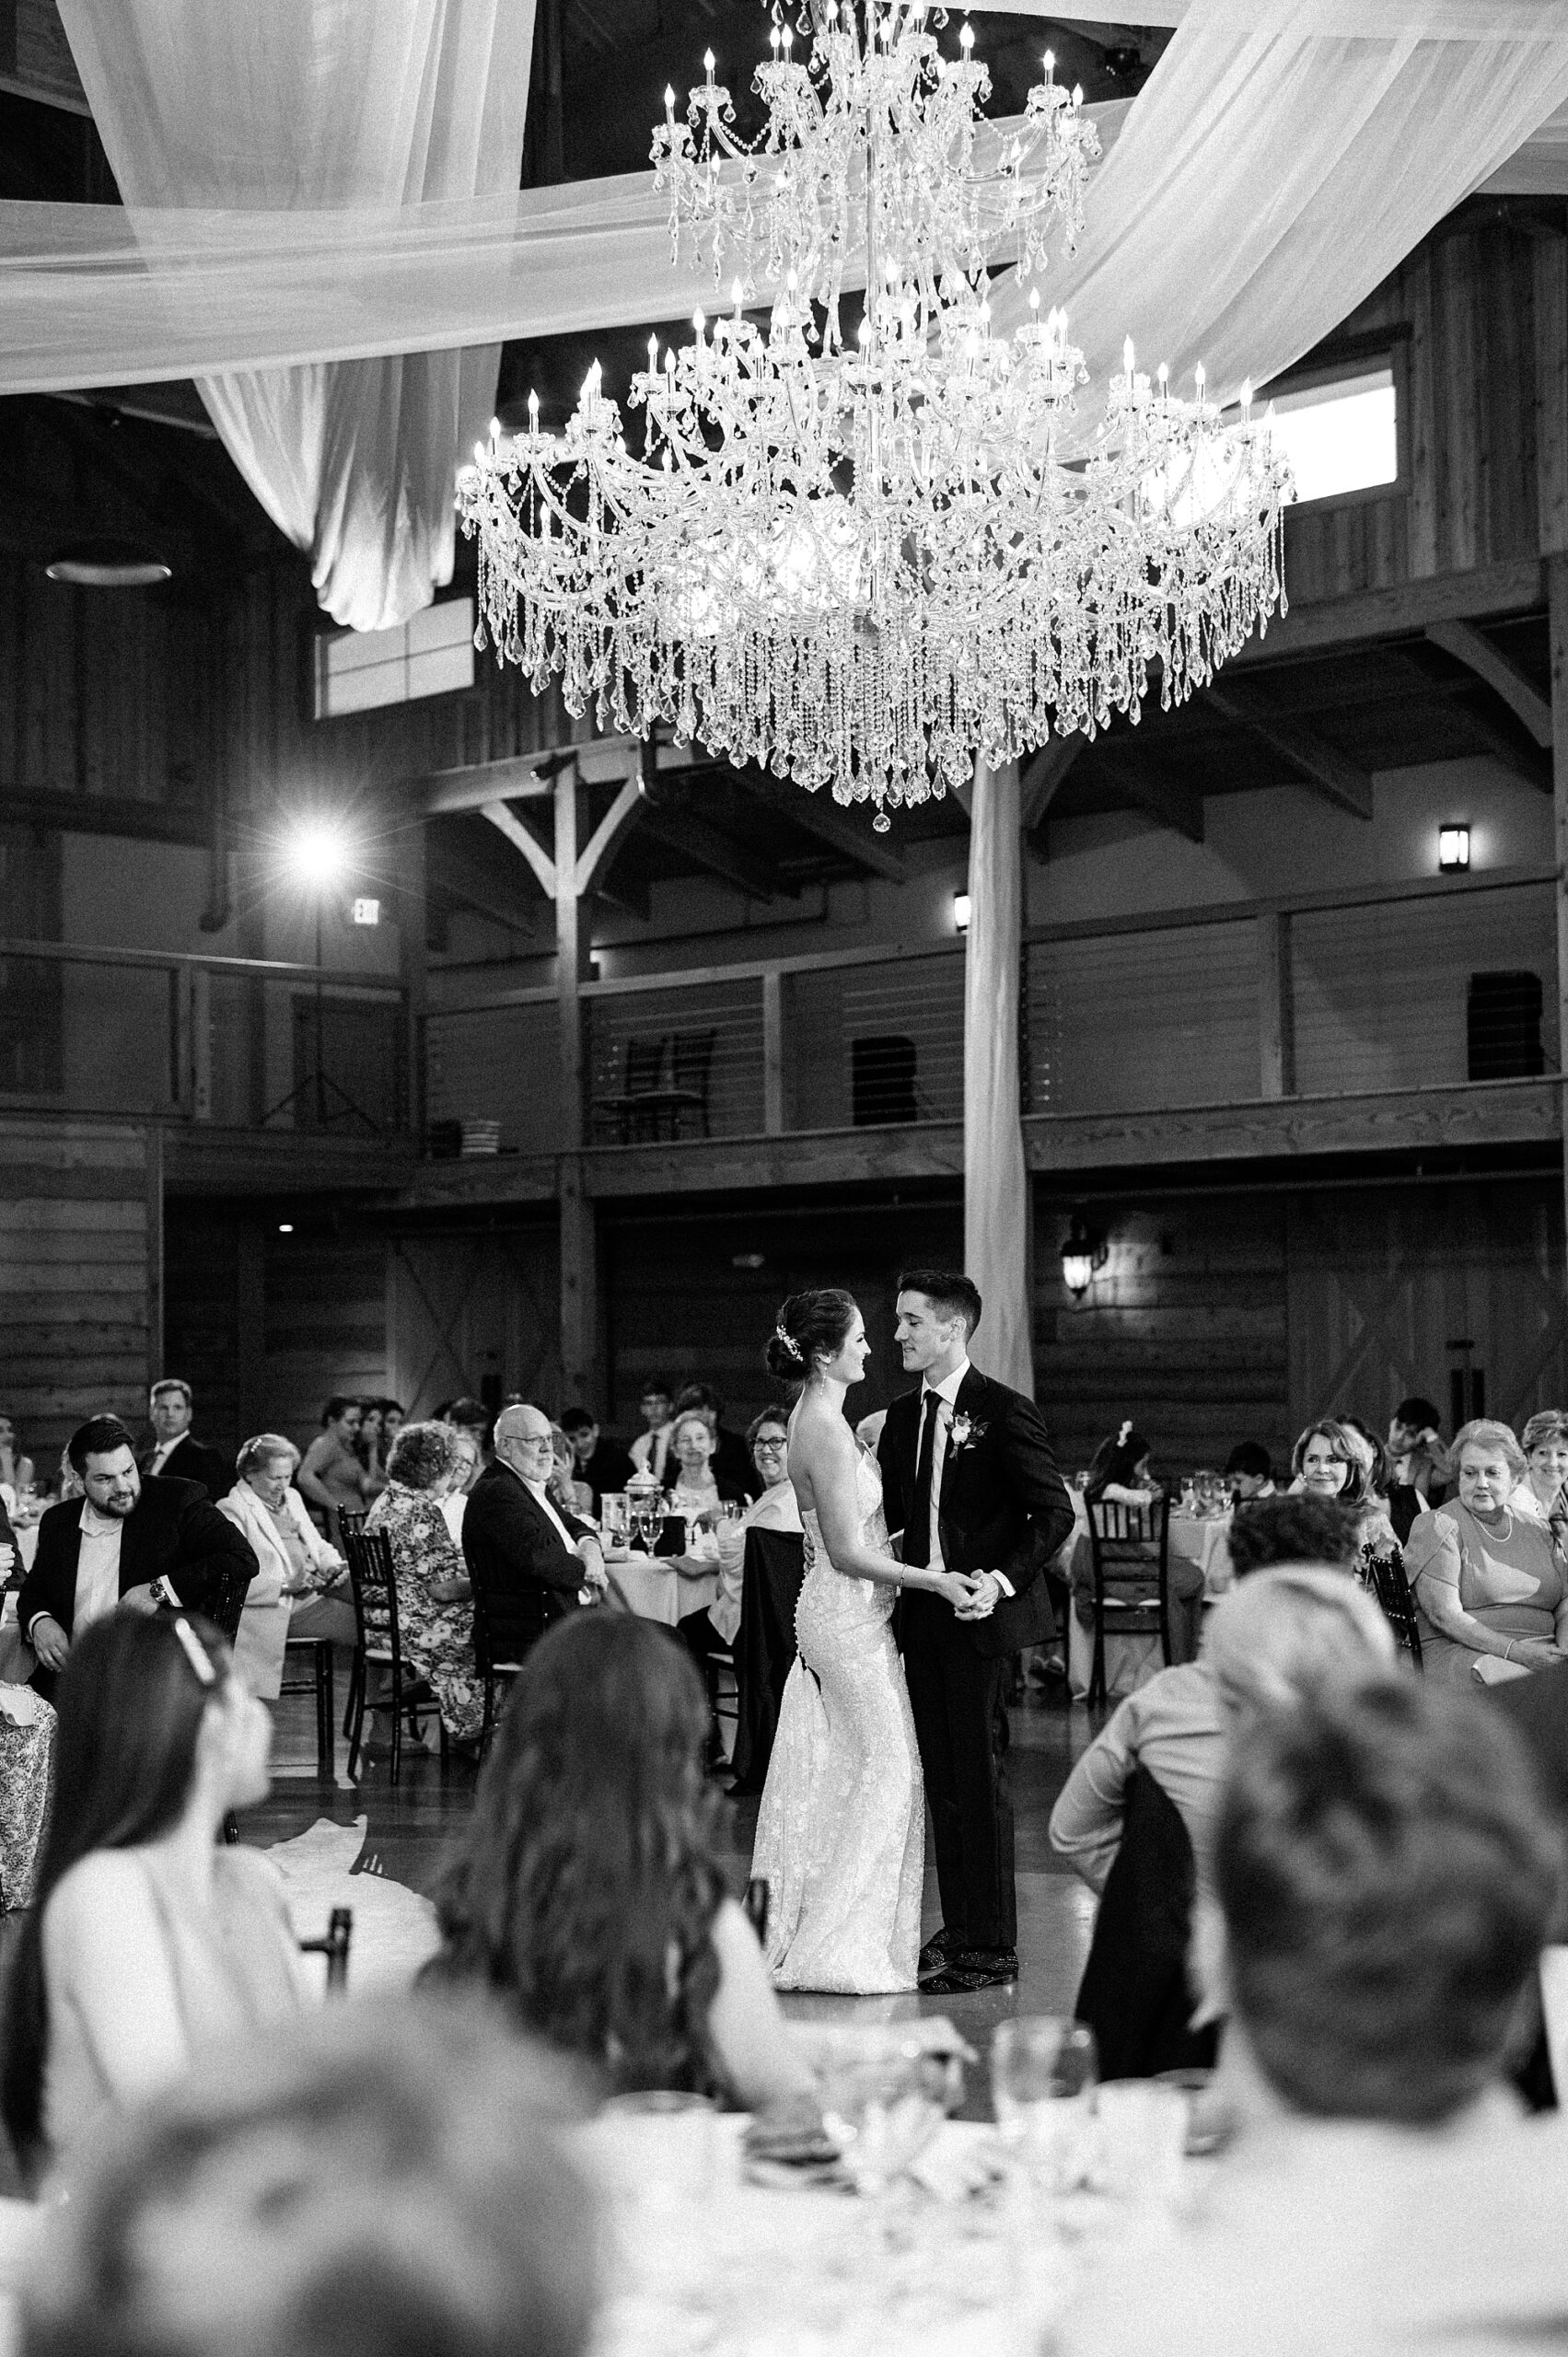 newlyweds dance together at wedding reception 